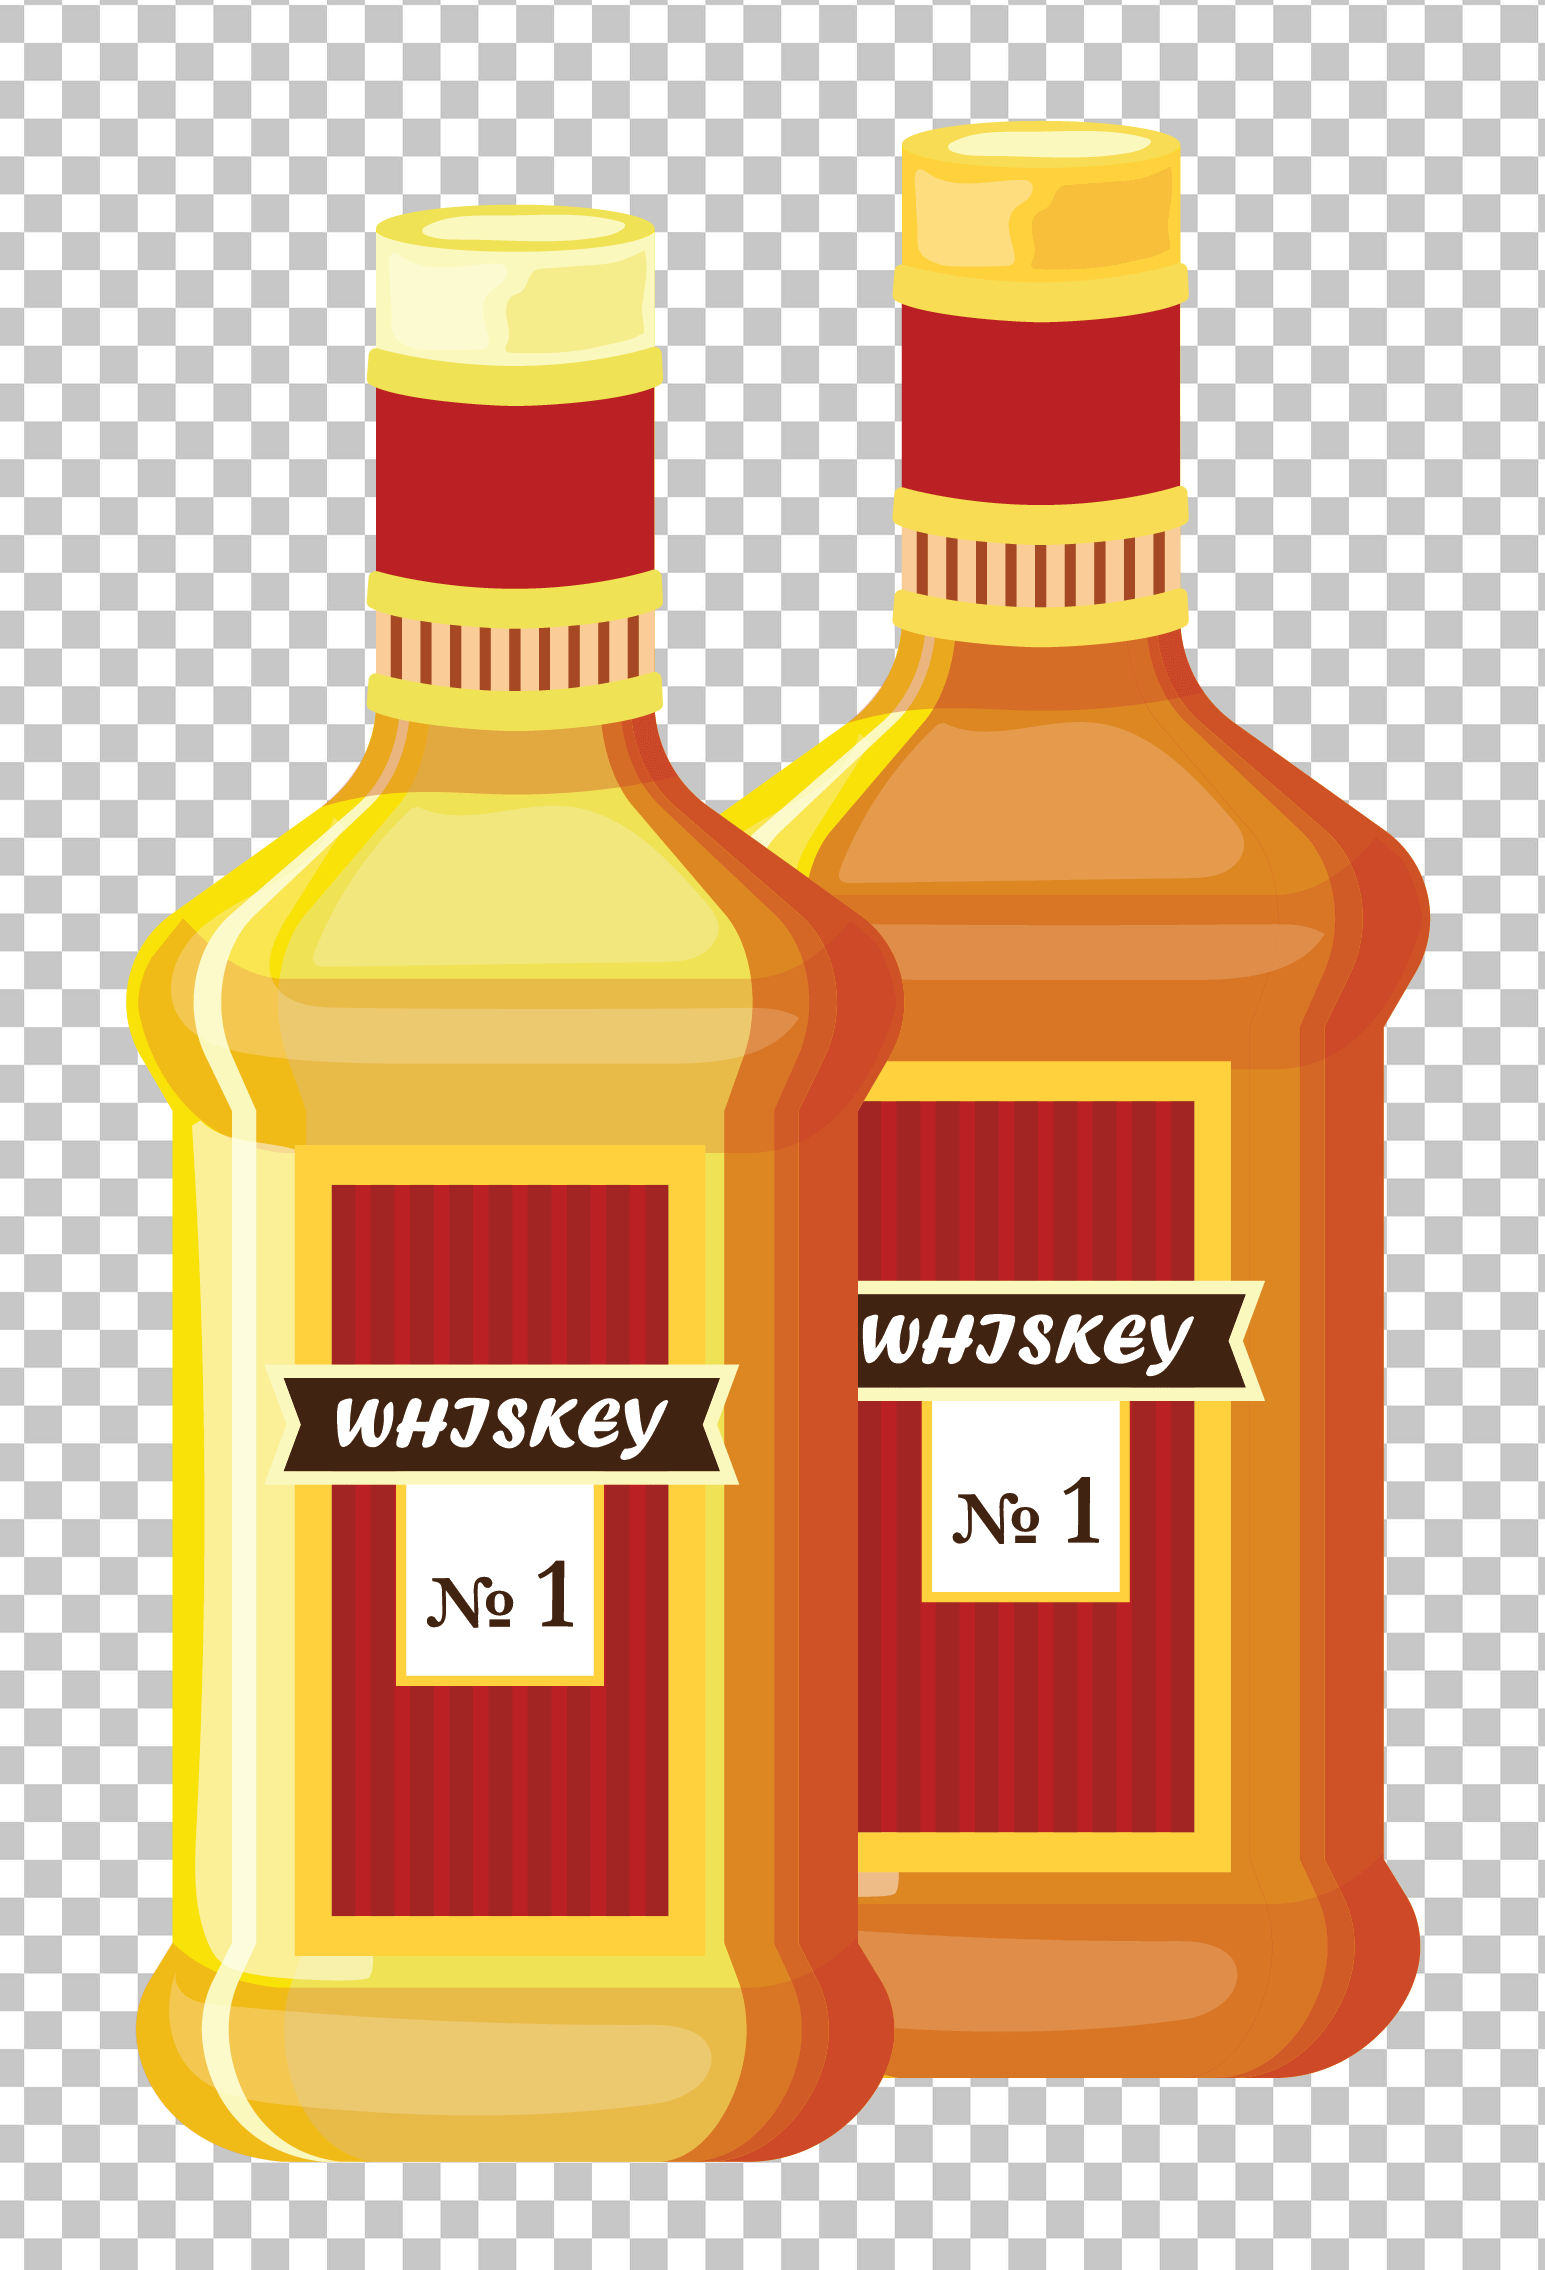 Two Bottles of Premium Whiskey vector illustration PNG Image